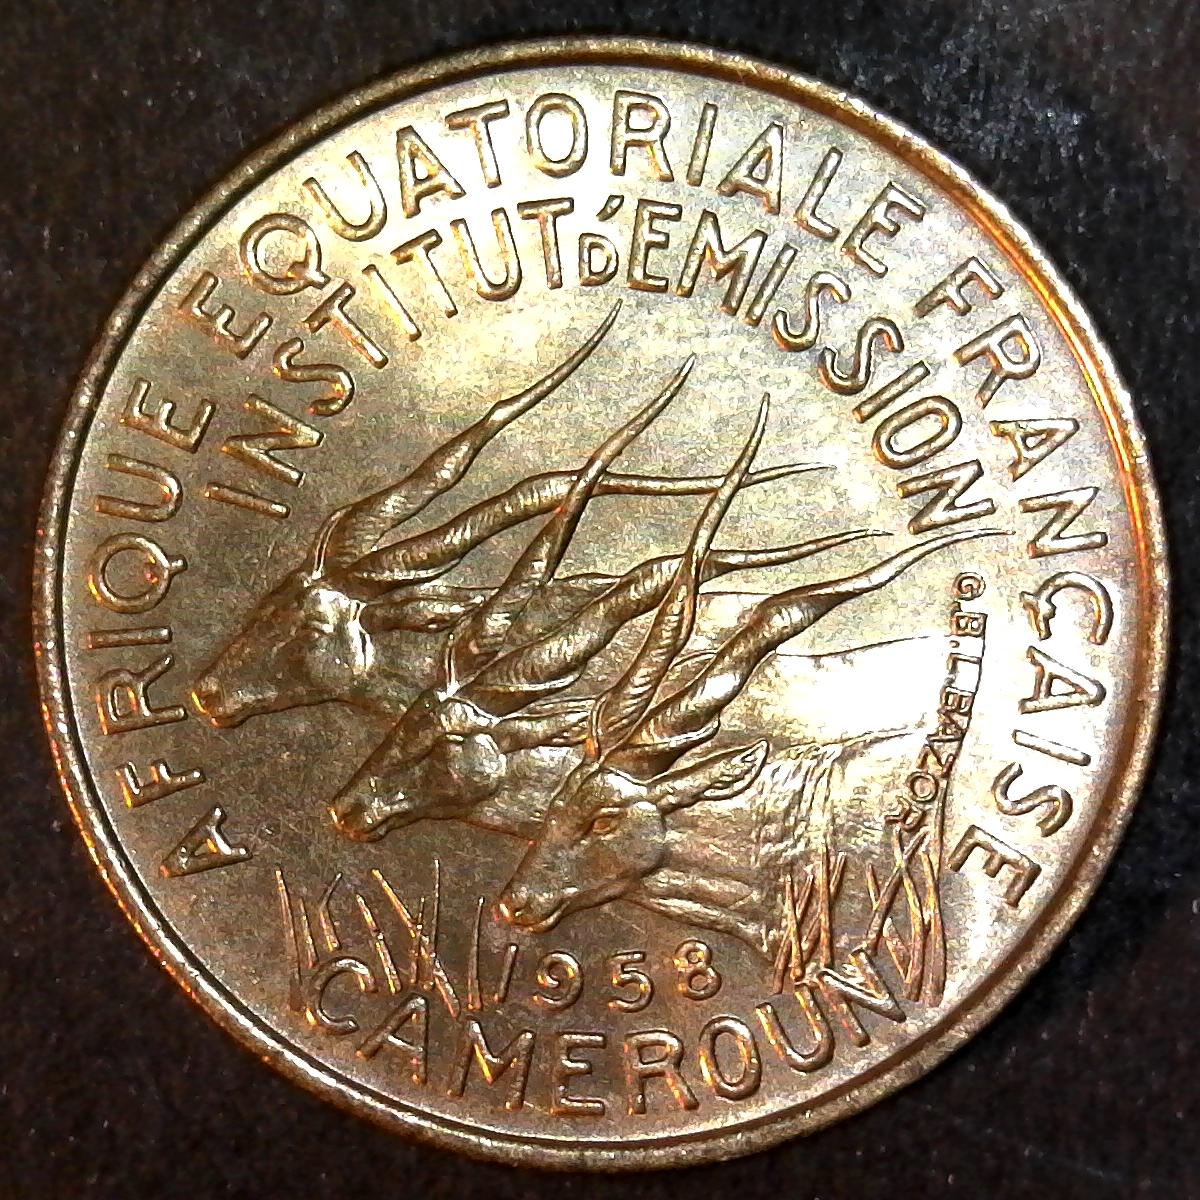 Cameroon 1958 25 Francs obverse.jpg